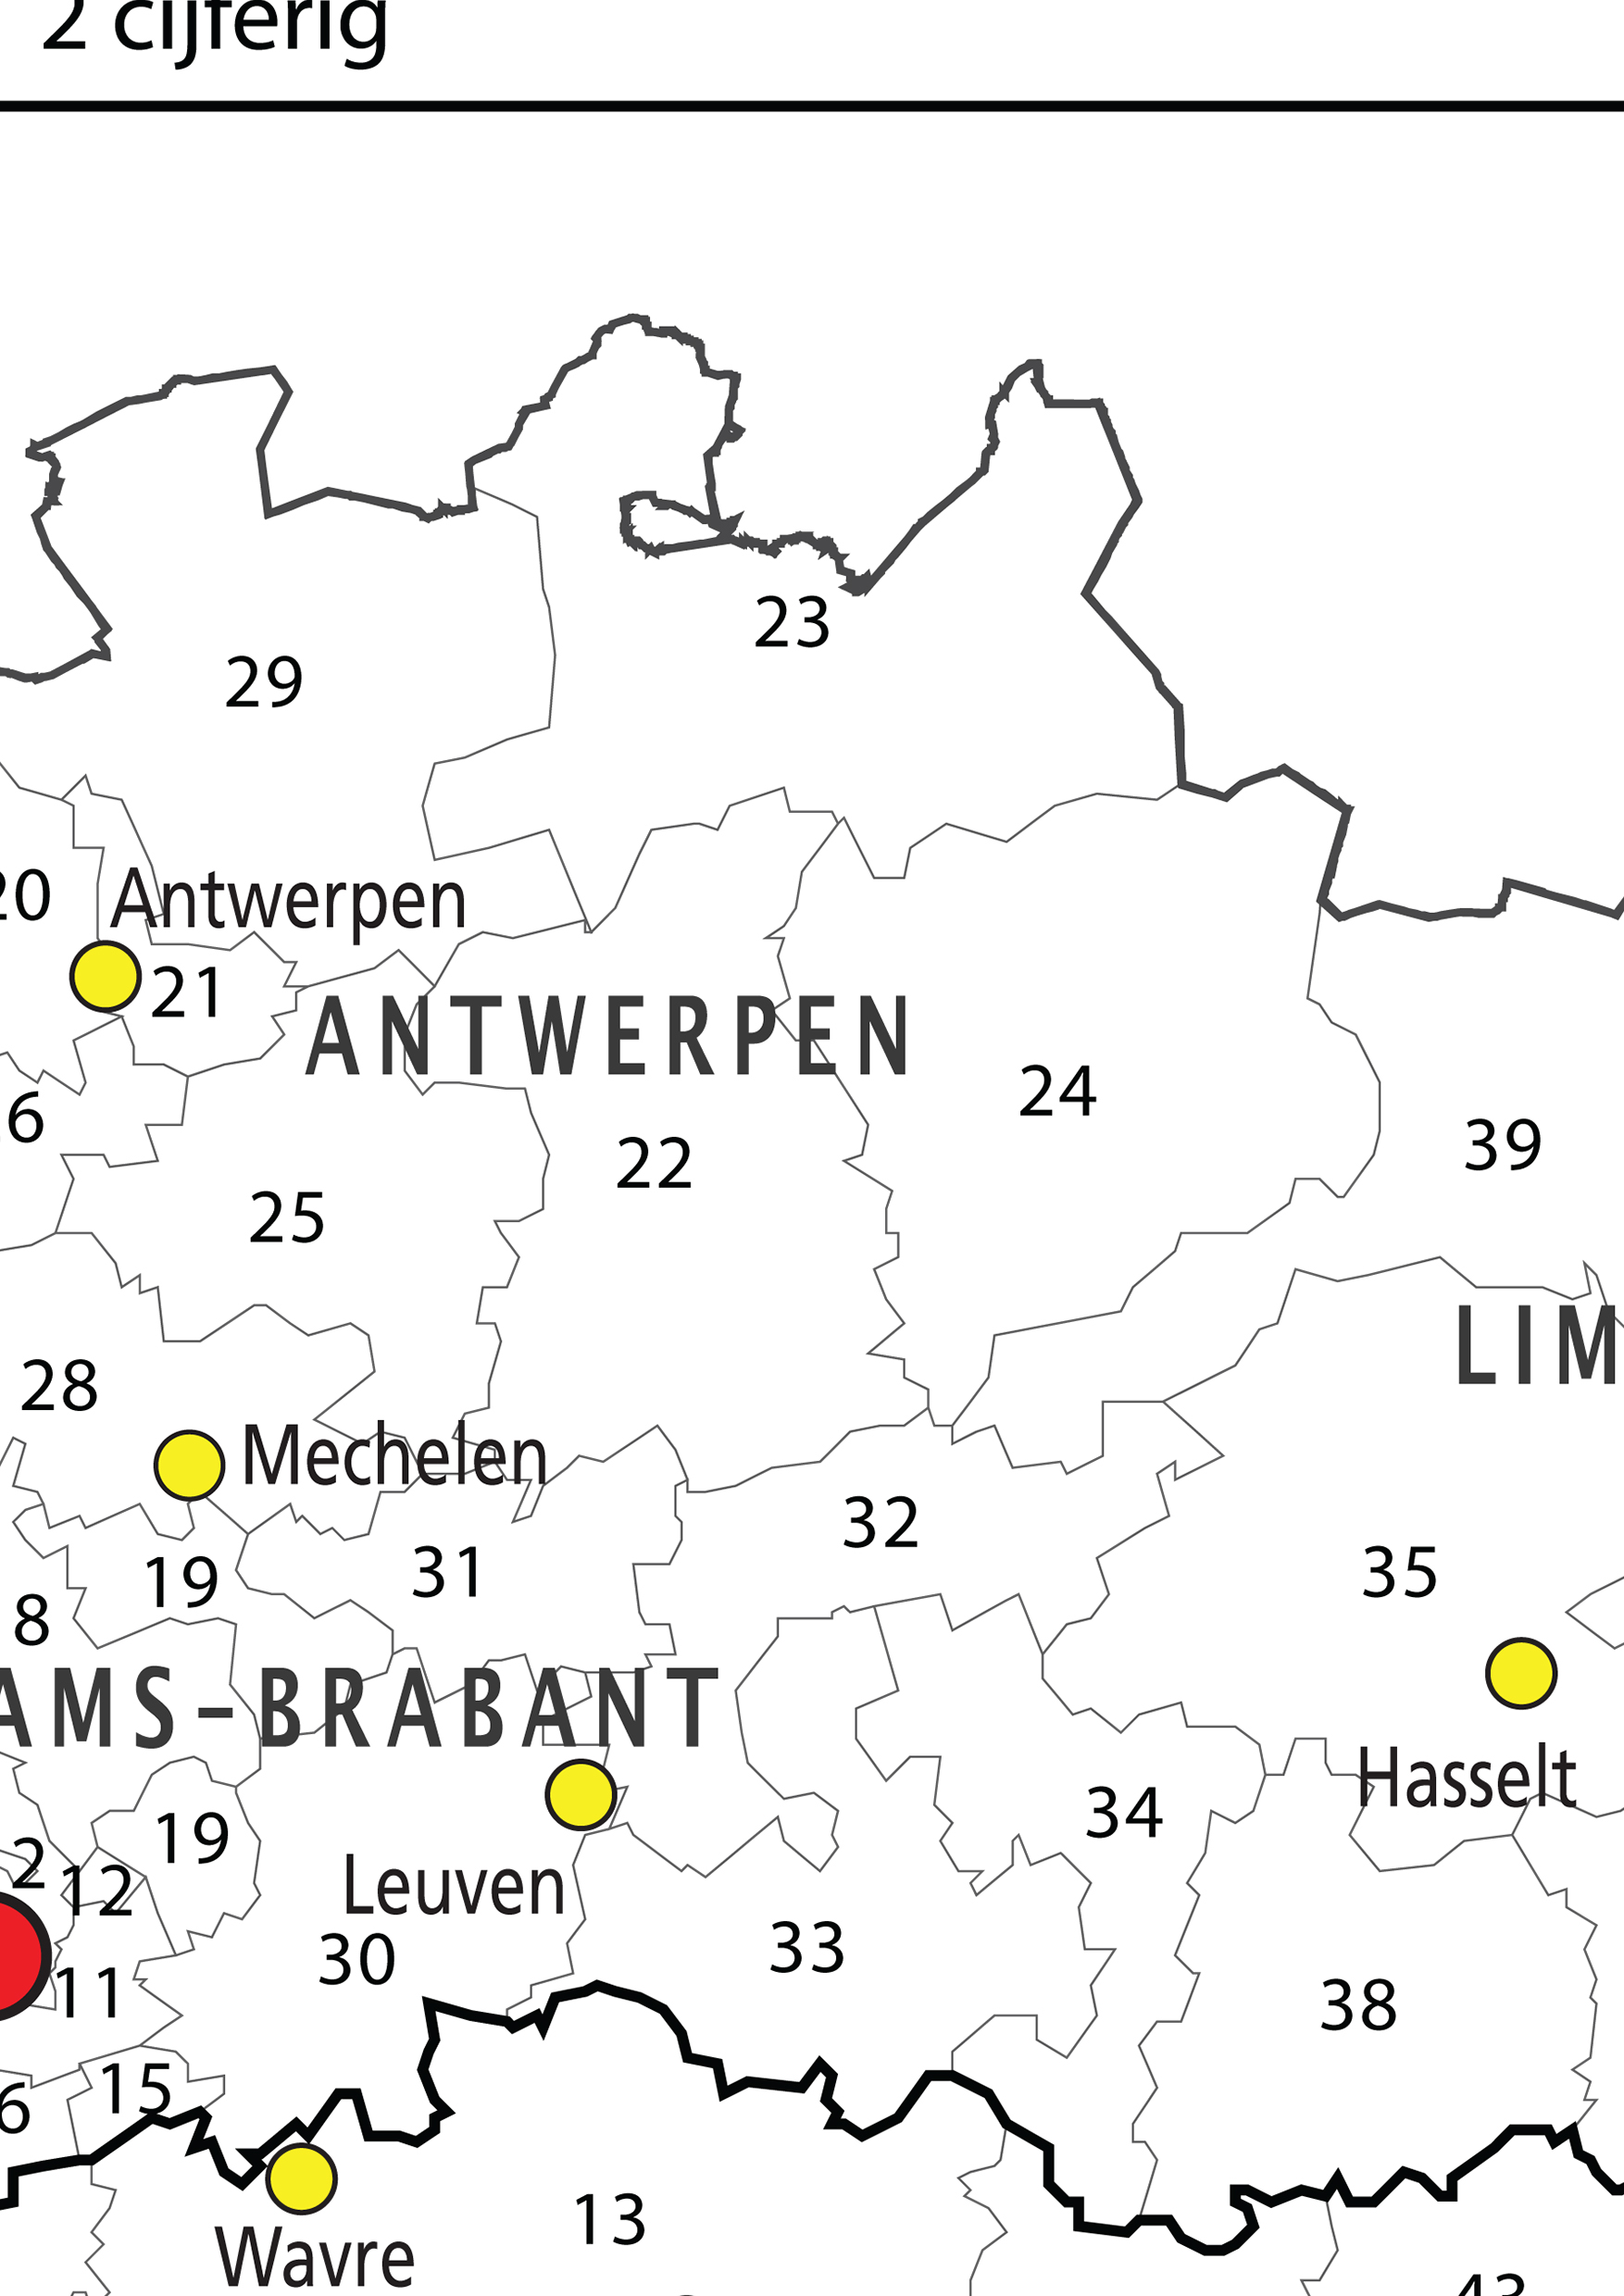 Digital 2 Digit Zip Code Map Belgium 647 The World Of